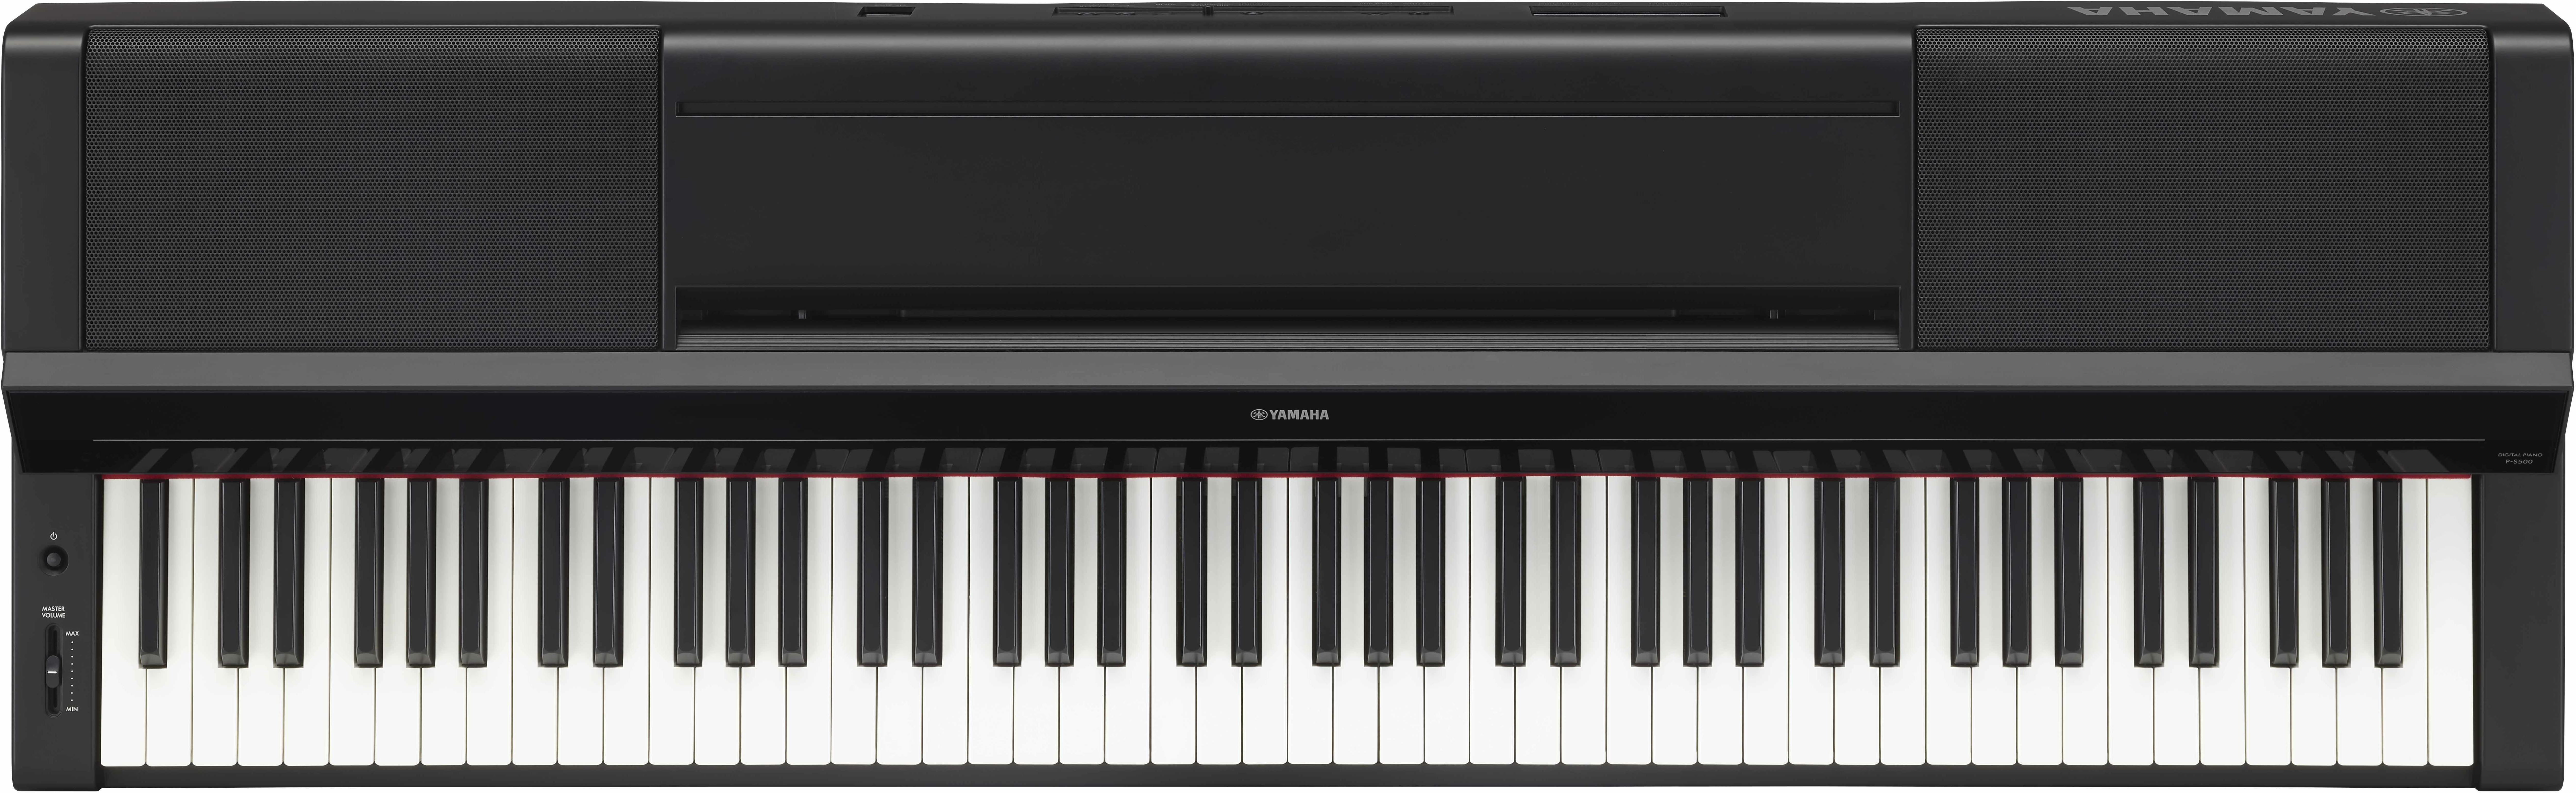 Yamaha P-s500 B - Portable digital piano - Main picture